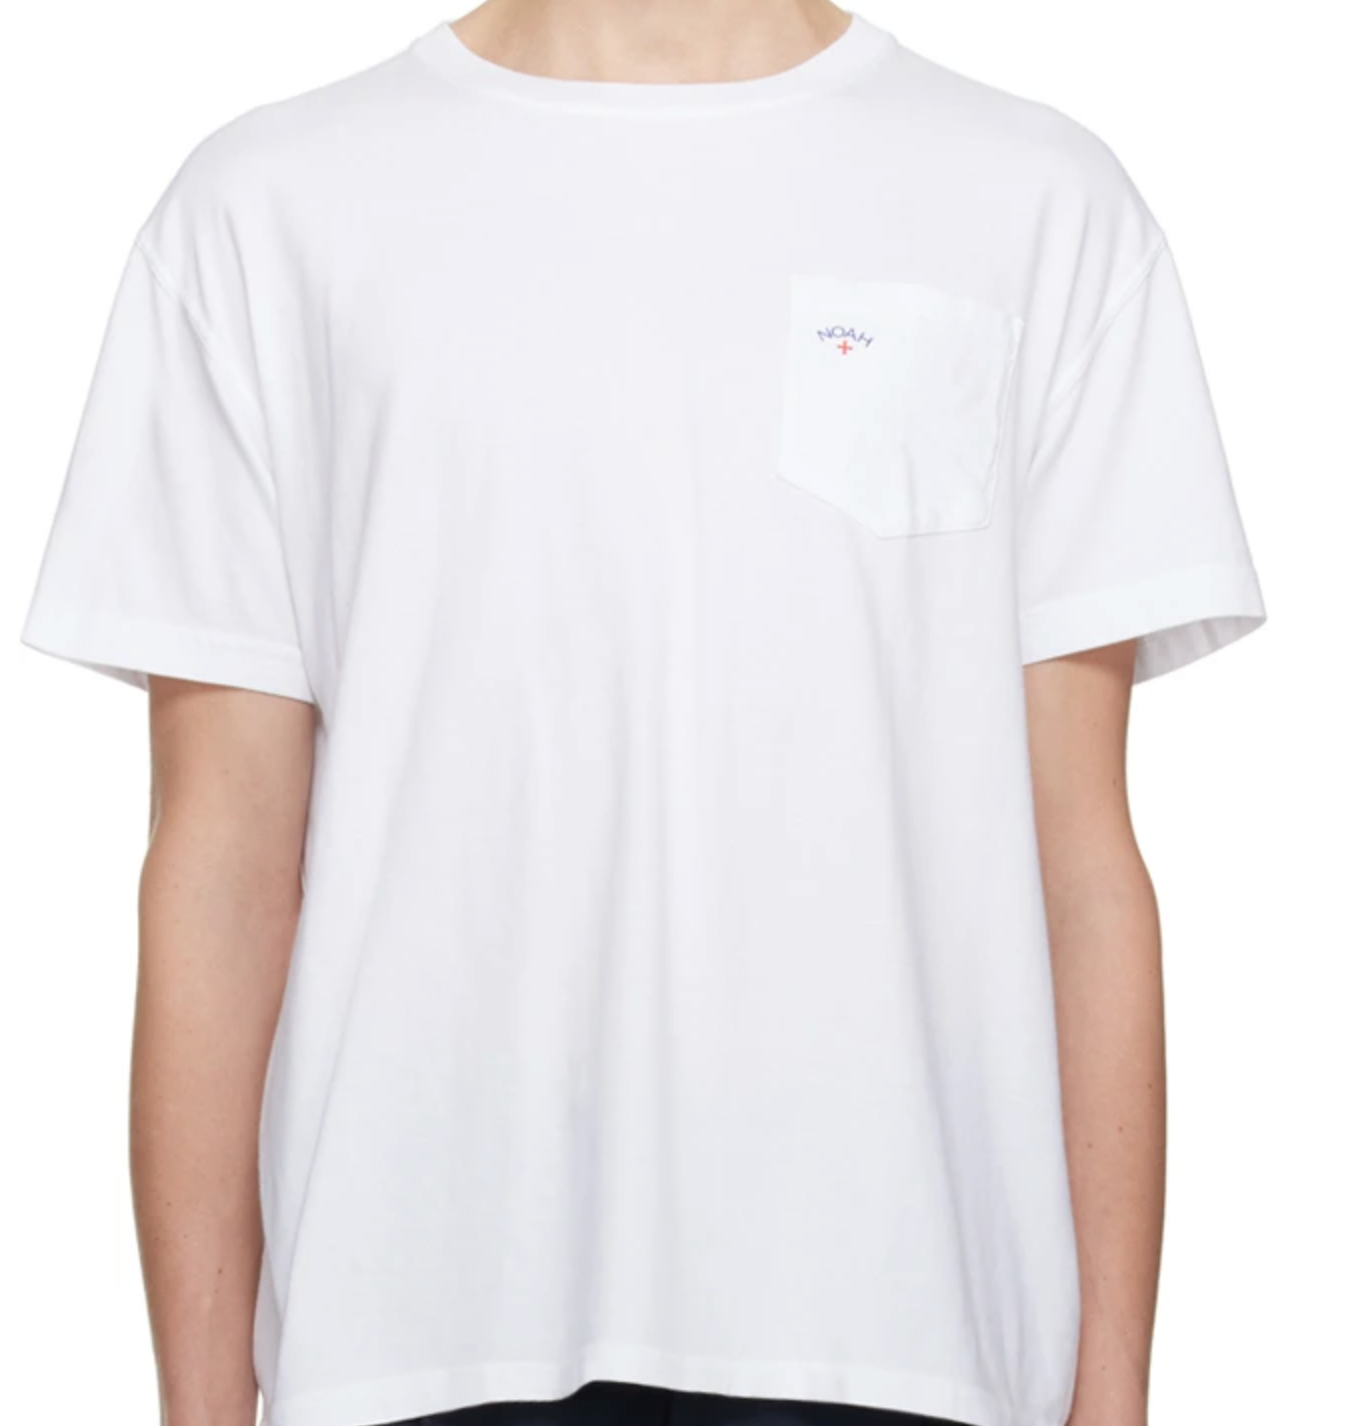 Noah Nyc Pocket T-Shirt (Str. XL)